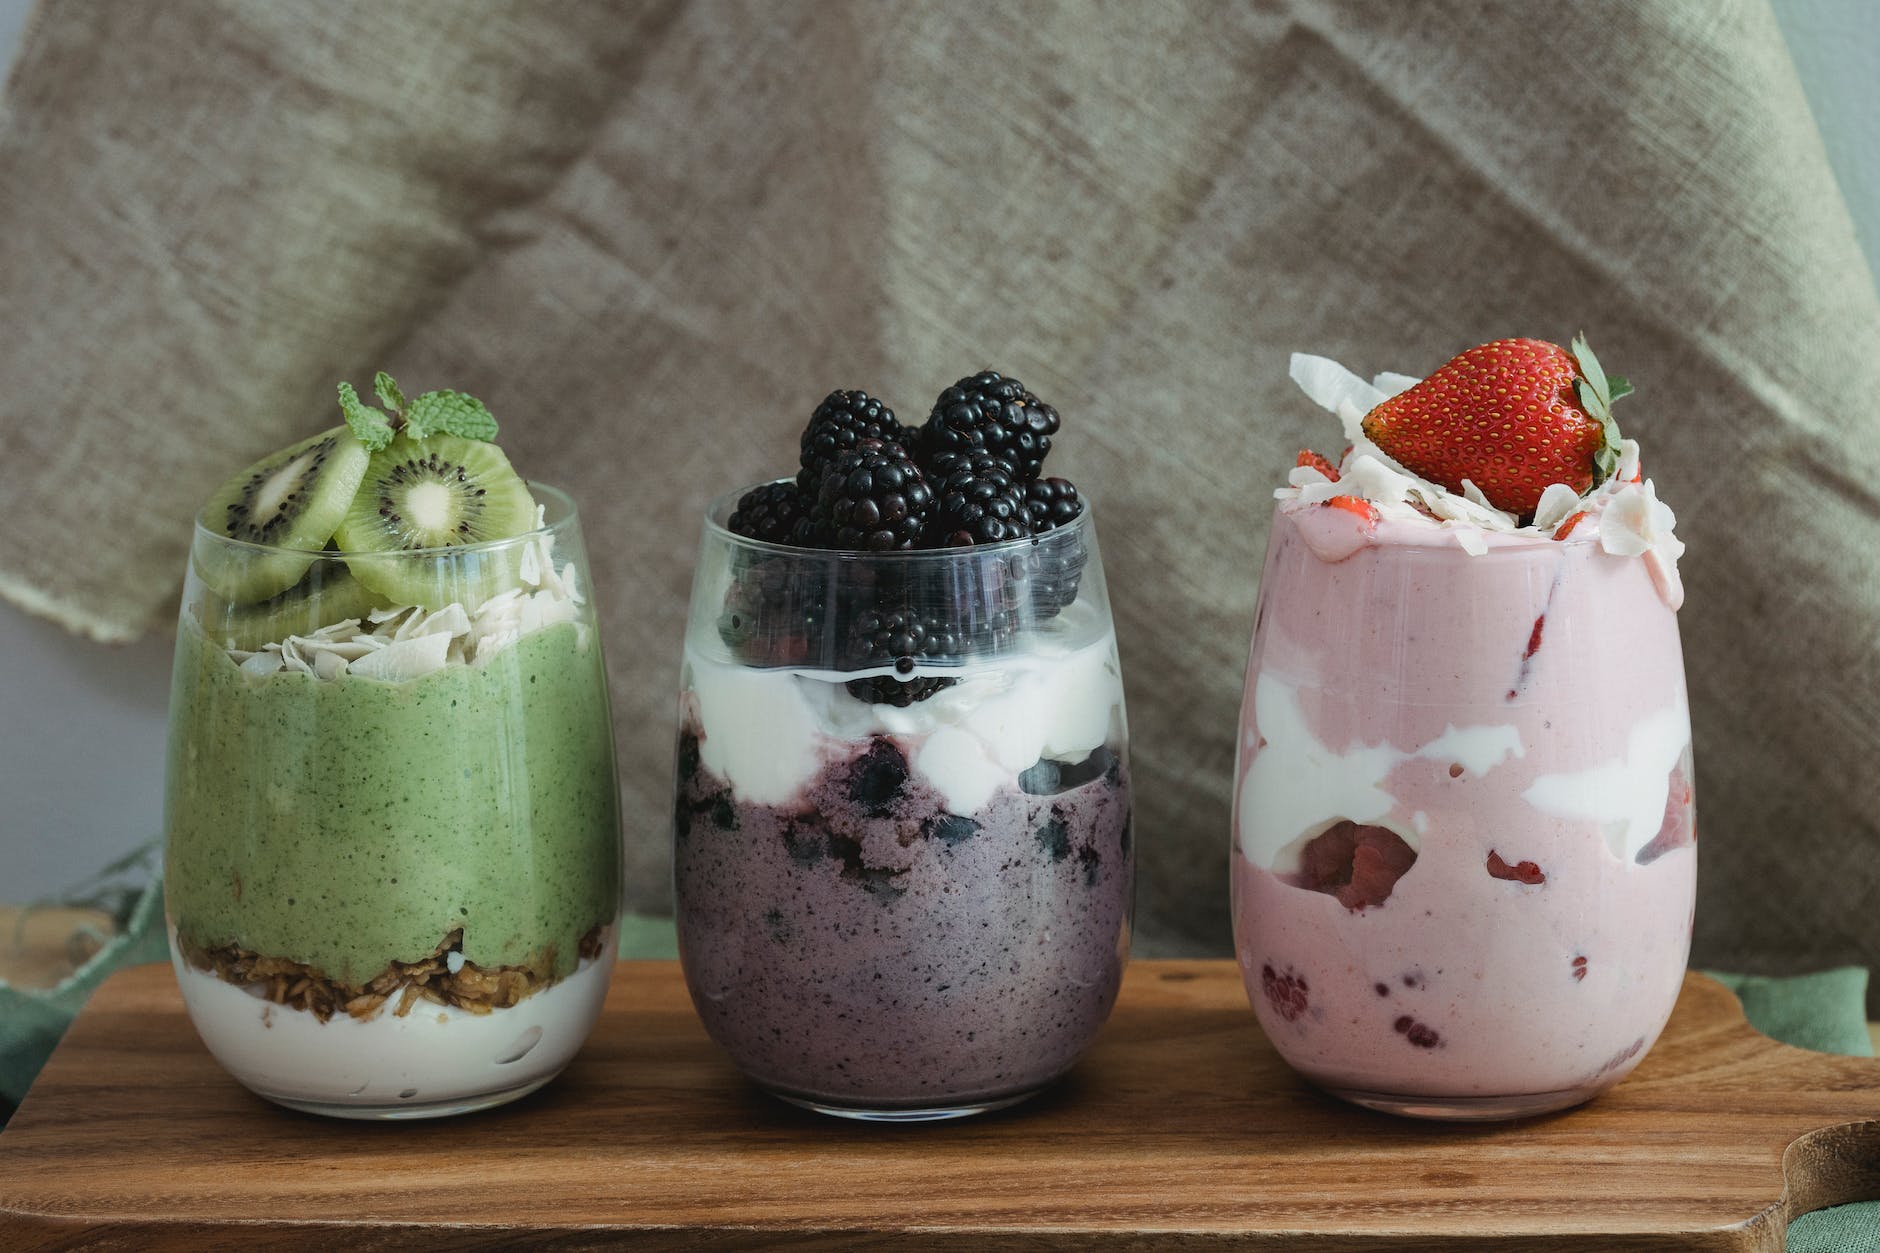 decorative, fresh fruits with yogurt in clear glass